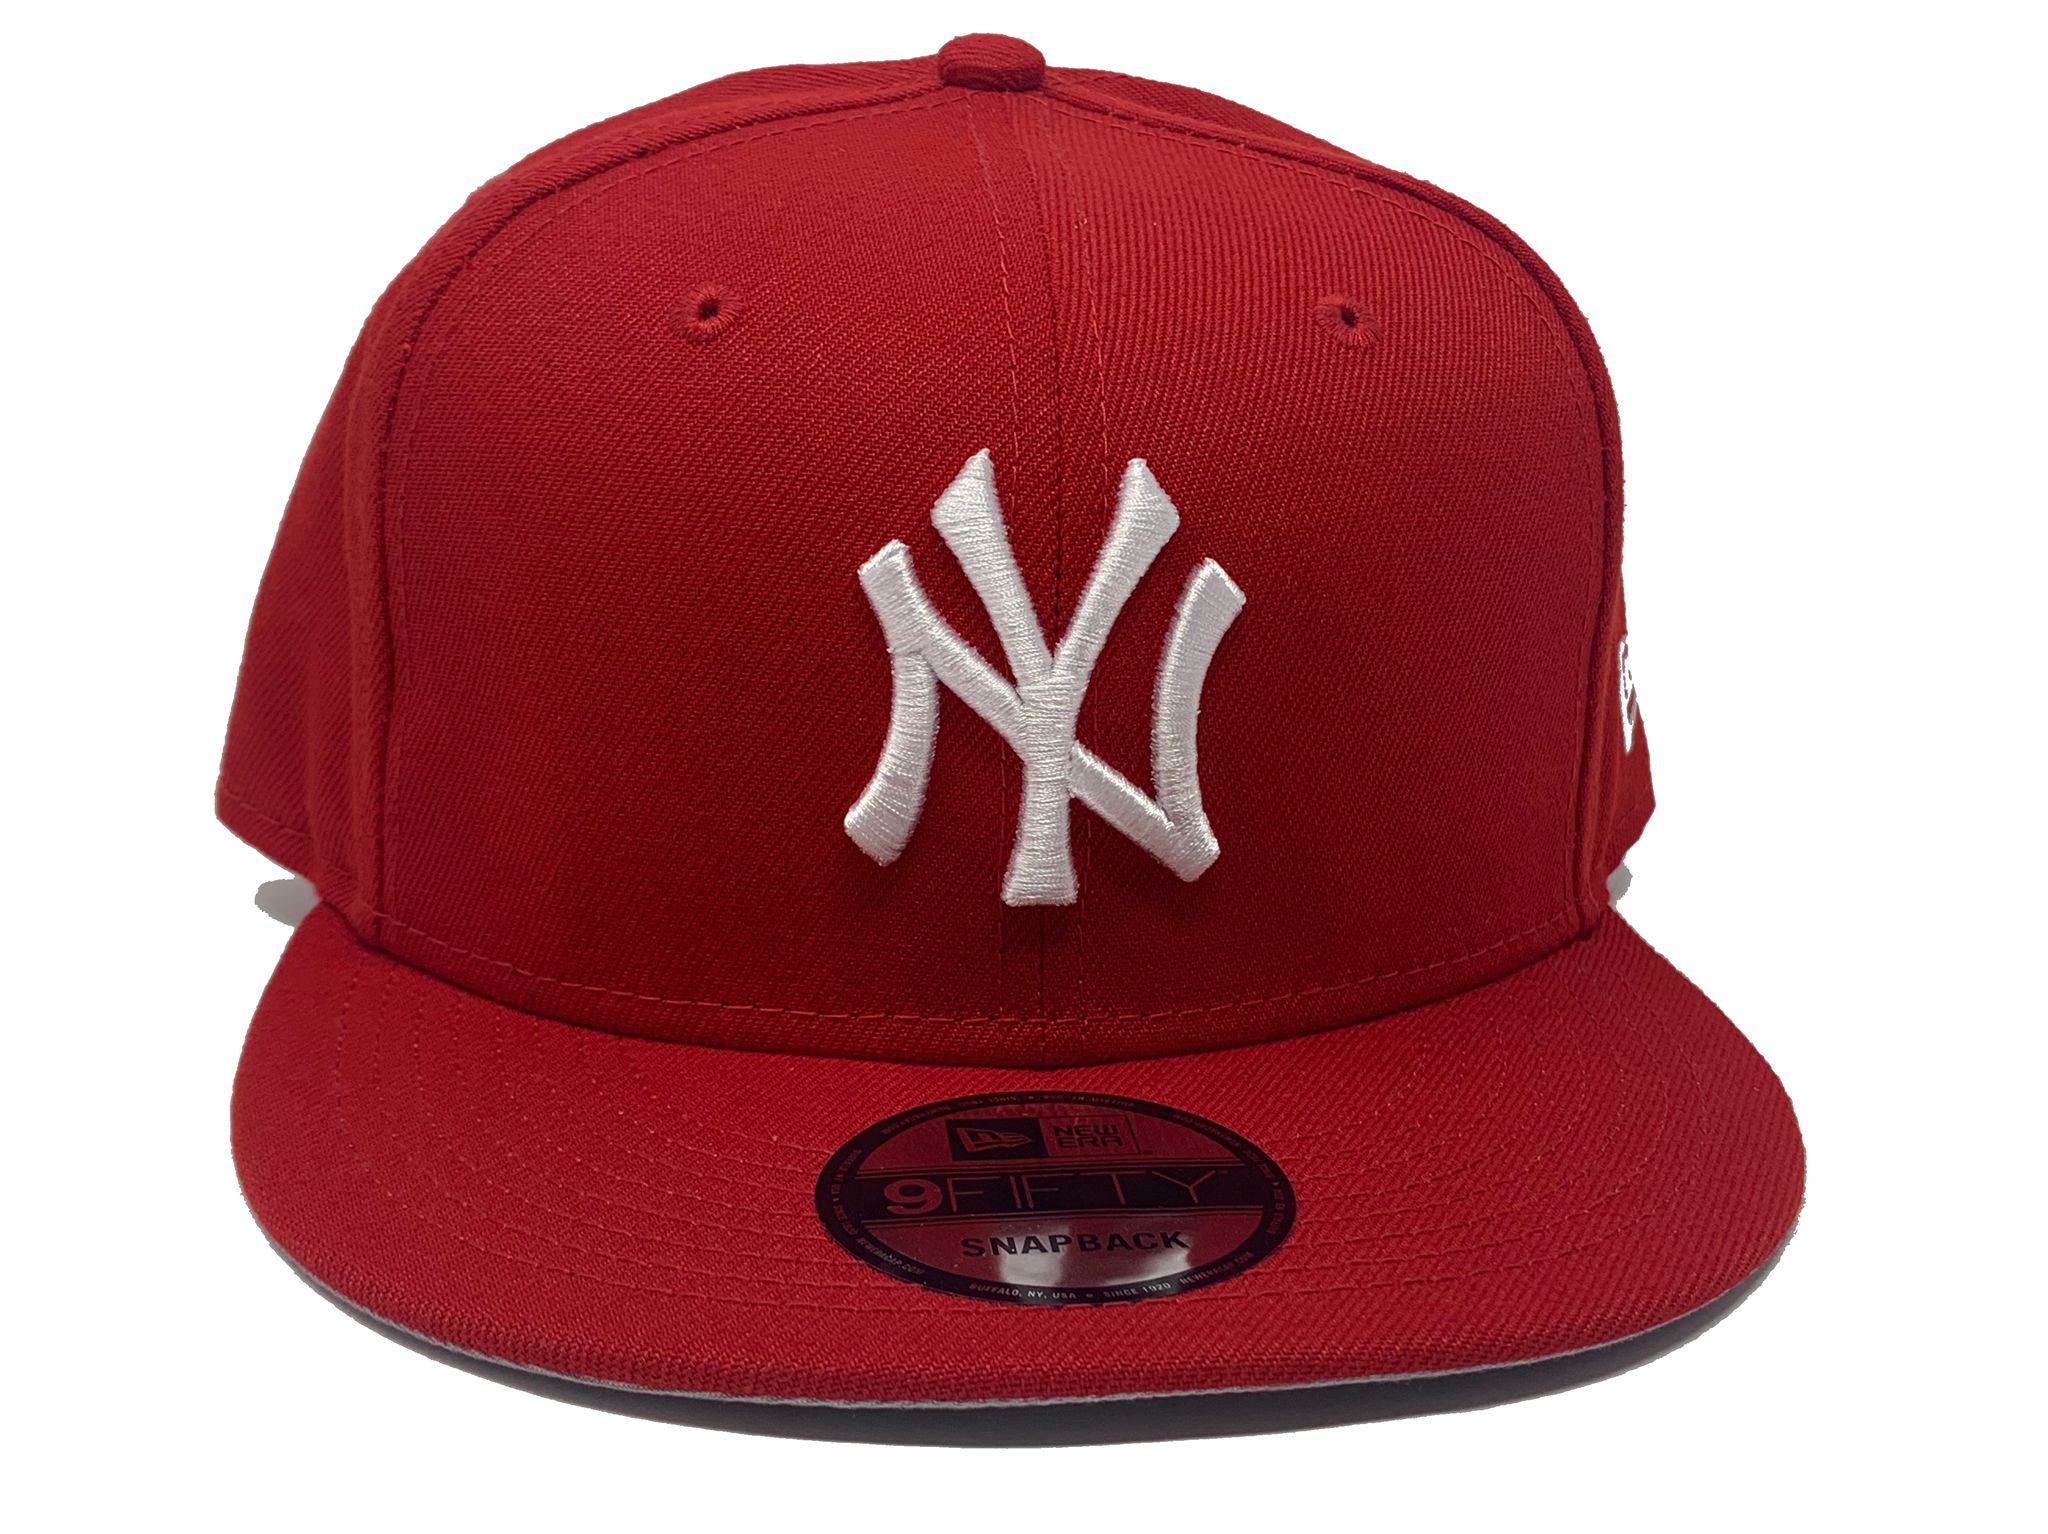 New era Colour Block 950 New York Yankees Cap Red